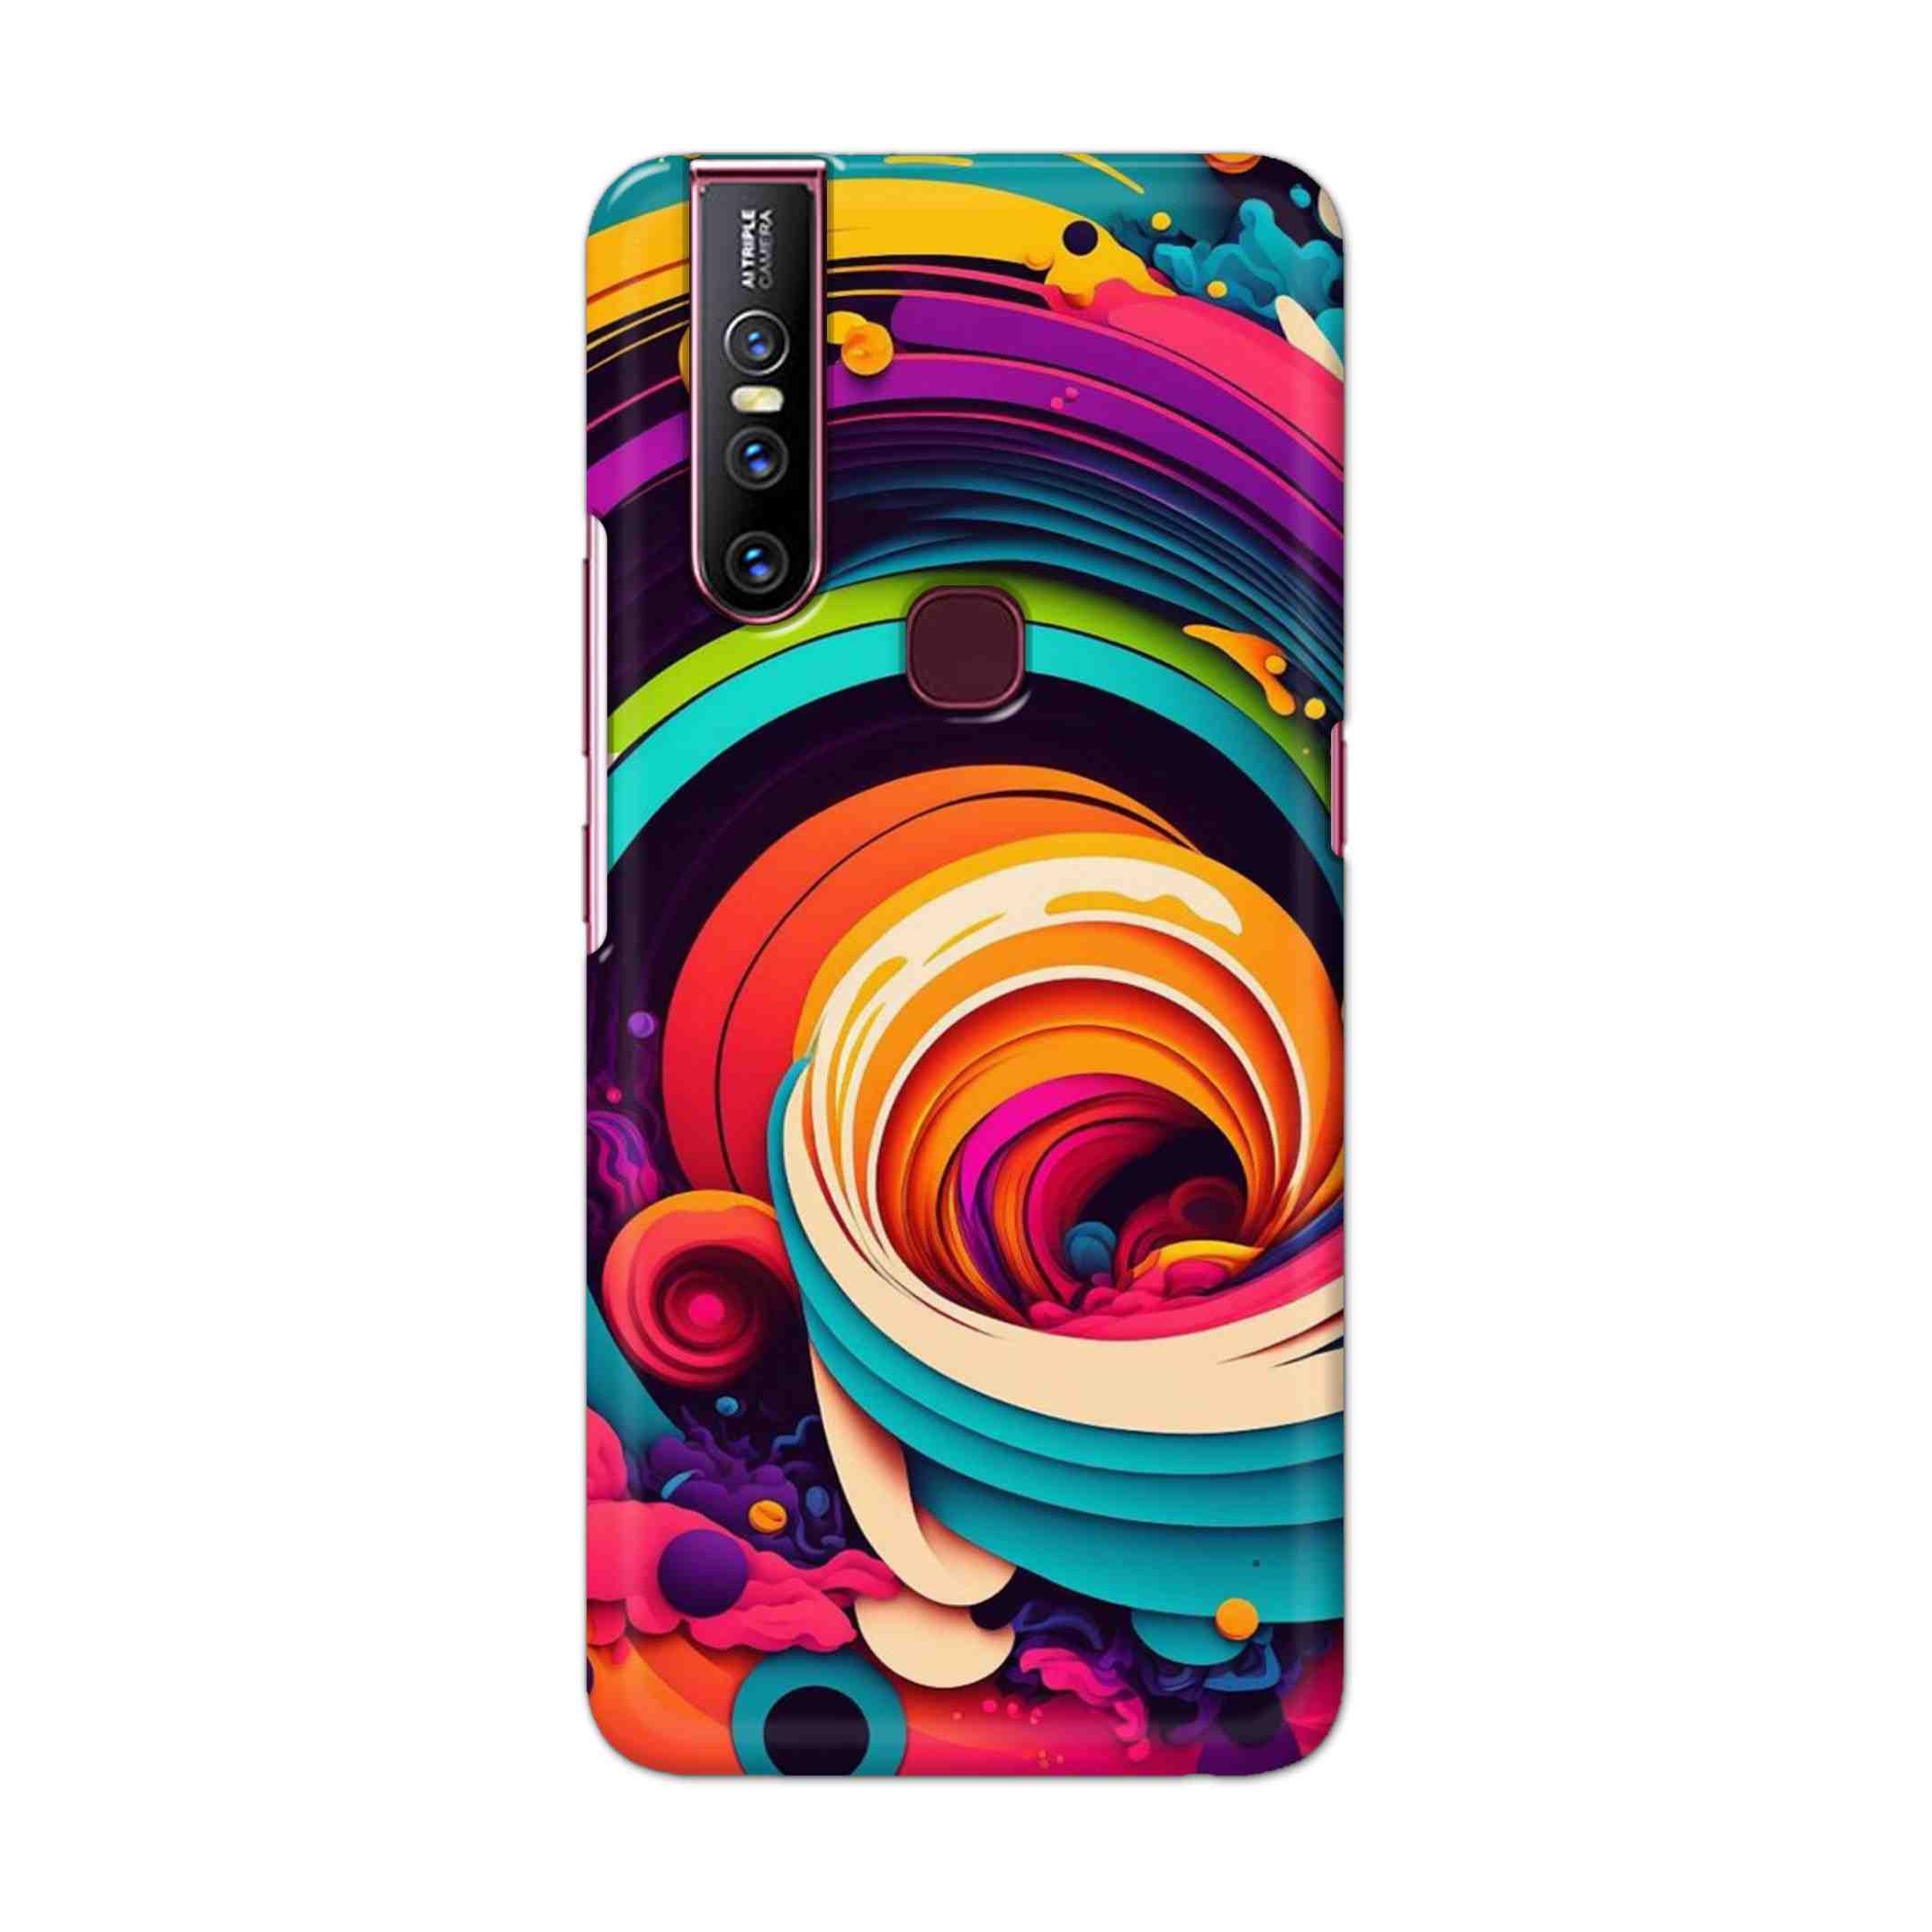 Buy Colour Circle Hard Back Mobile Phone Case Cover For Vivo V15 Online